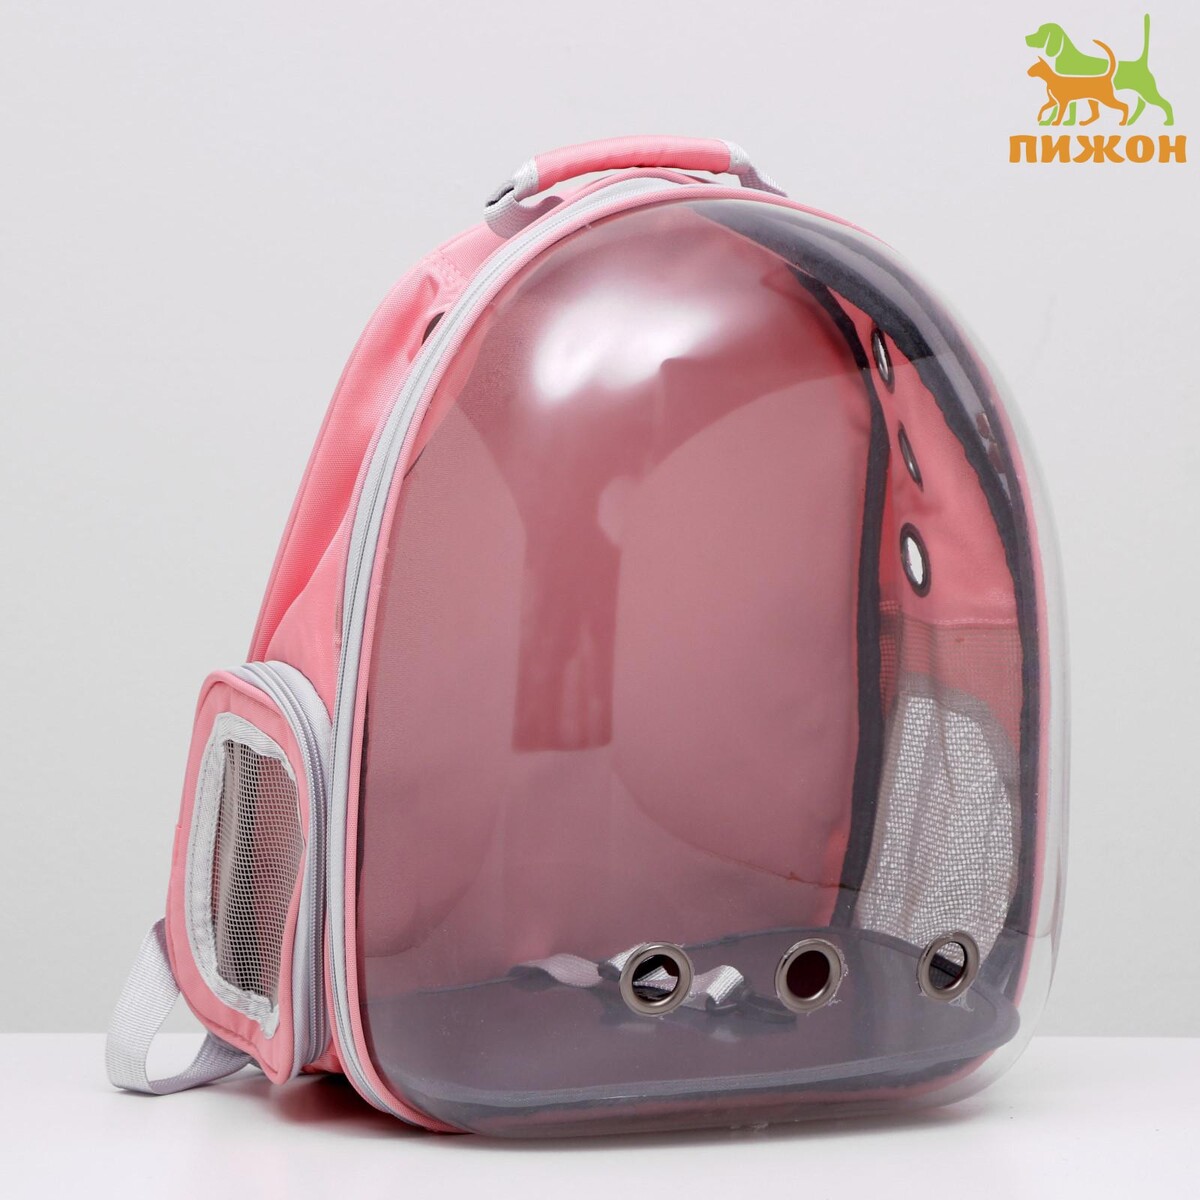 Рюкзак для переноски животных, прозрачный, 31 х 28 х 42 см, розовый рюкзак для переноски животных прозрачный 33 х 25 х 41 см 7984417